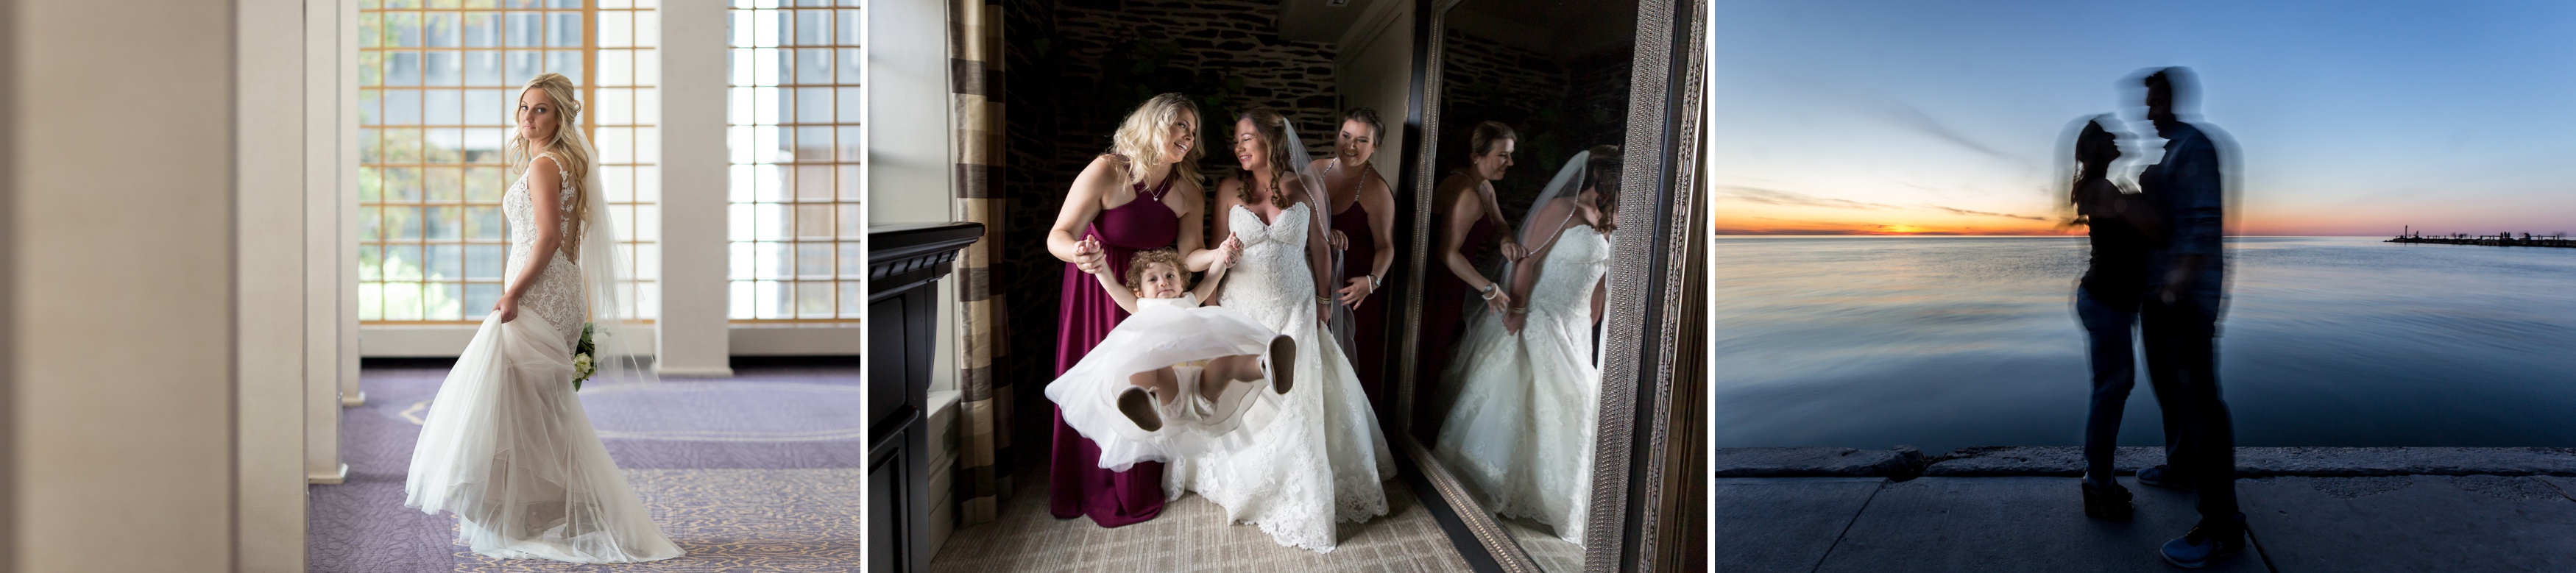 rochester-wedding-photographer